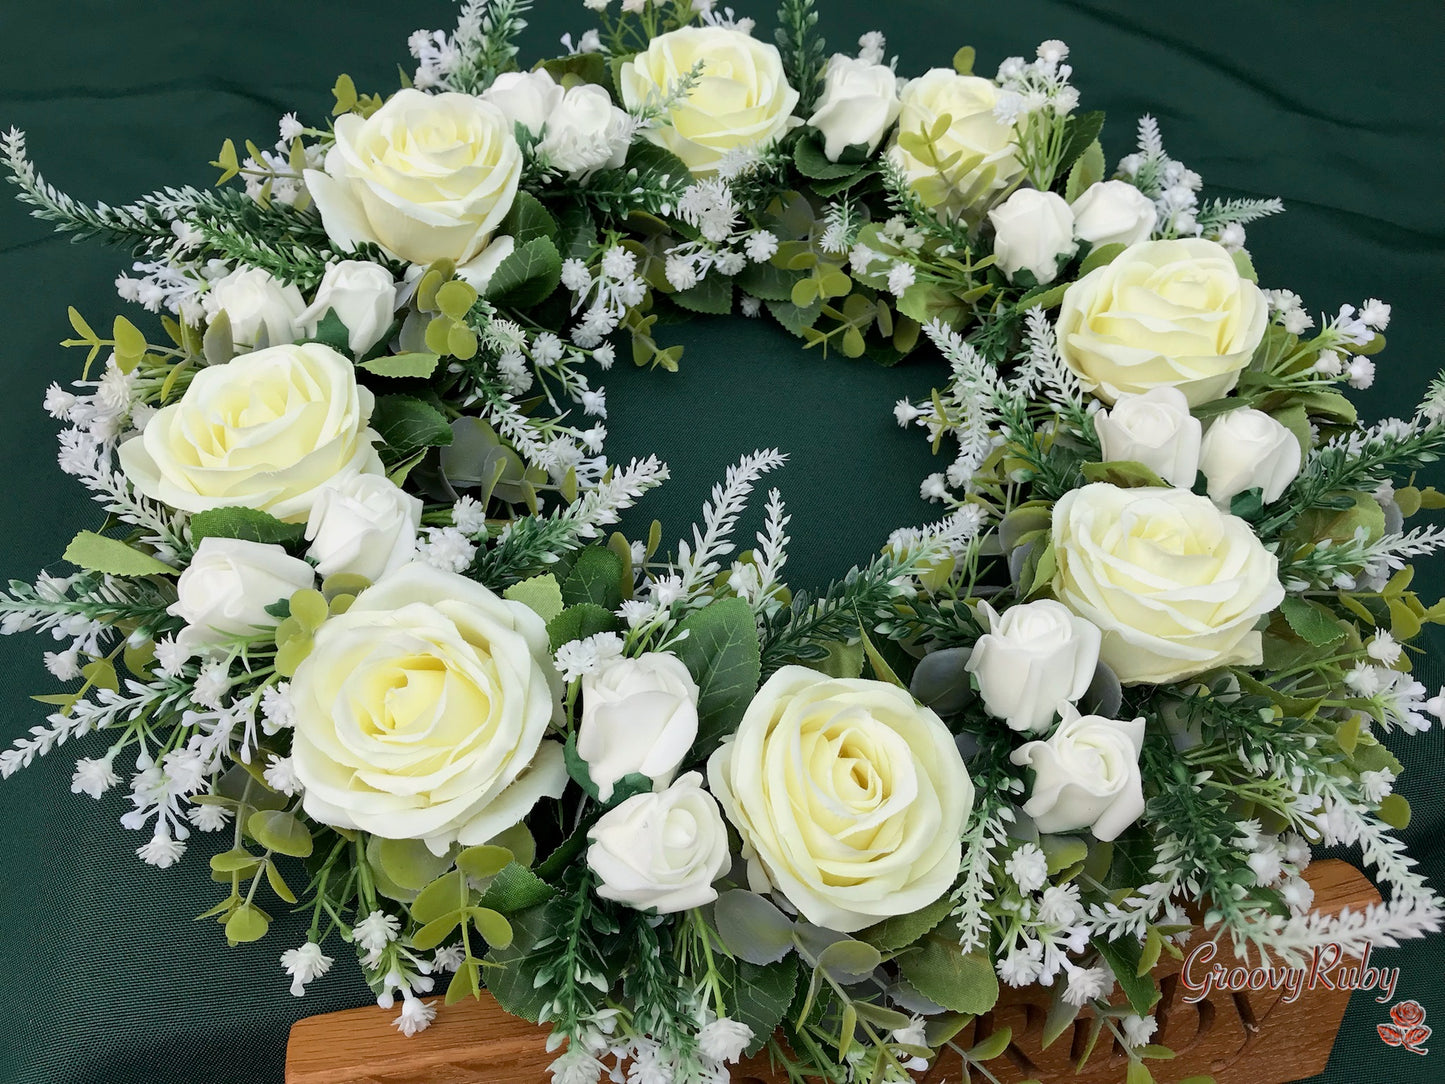 Ivory Rose Wreath